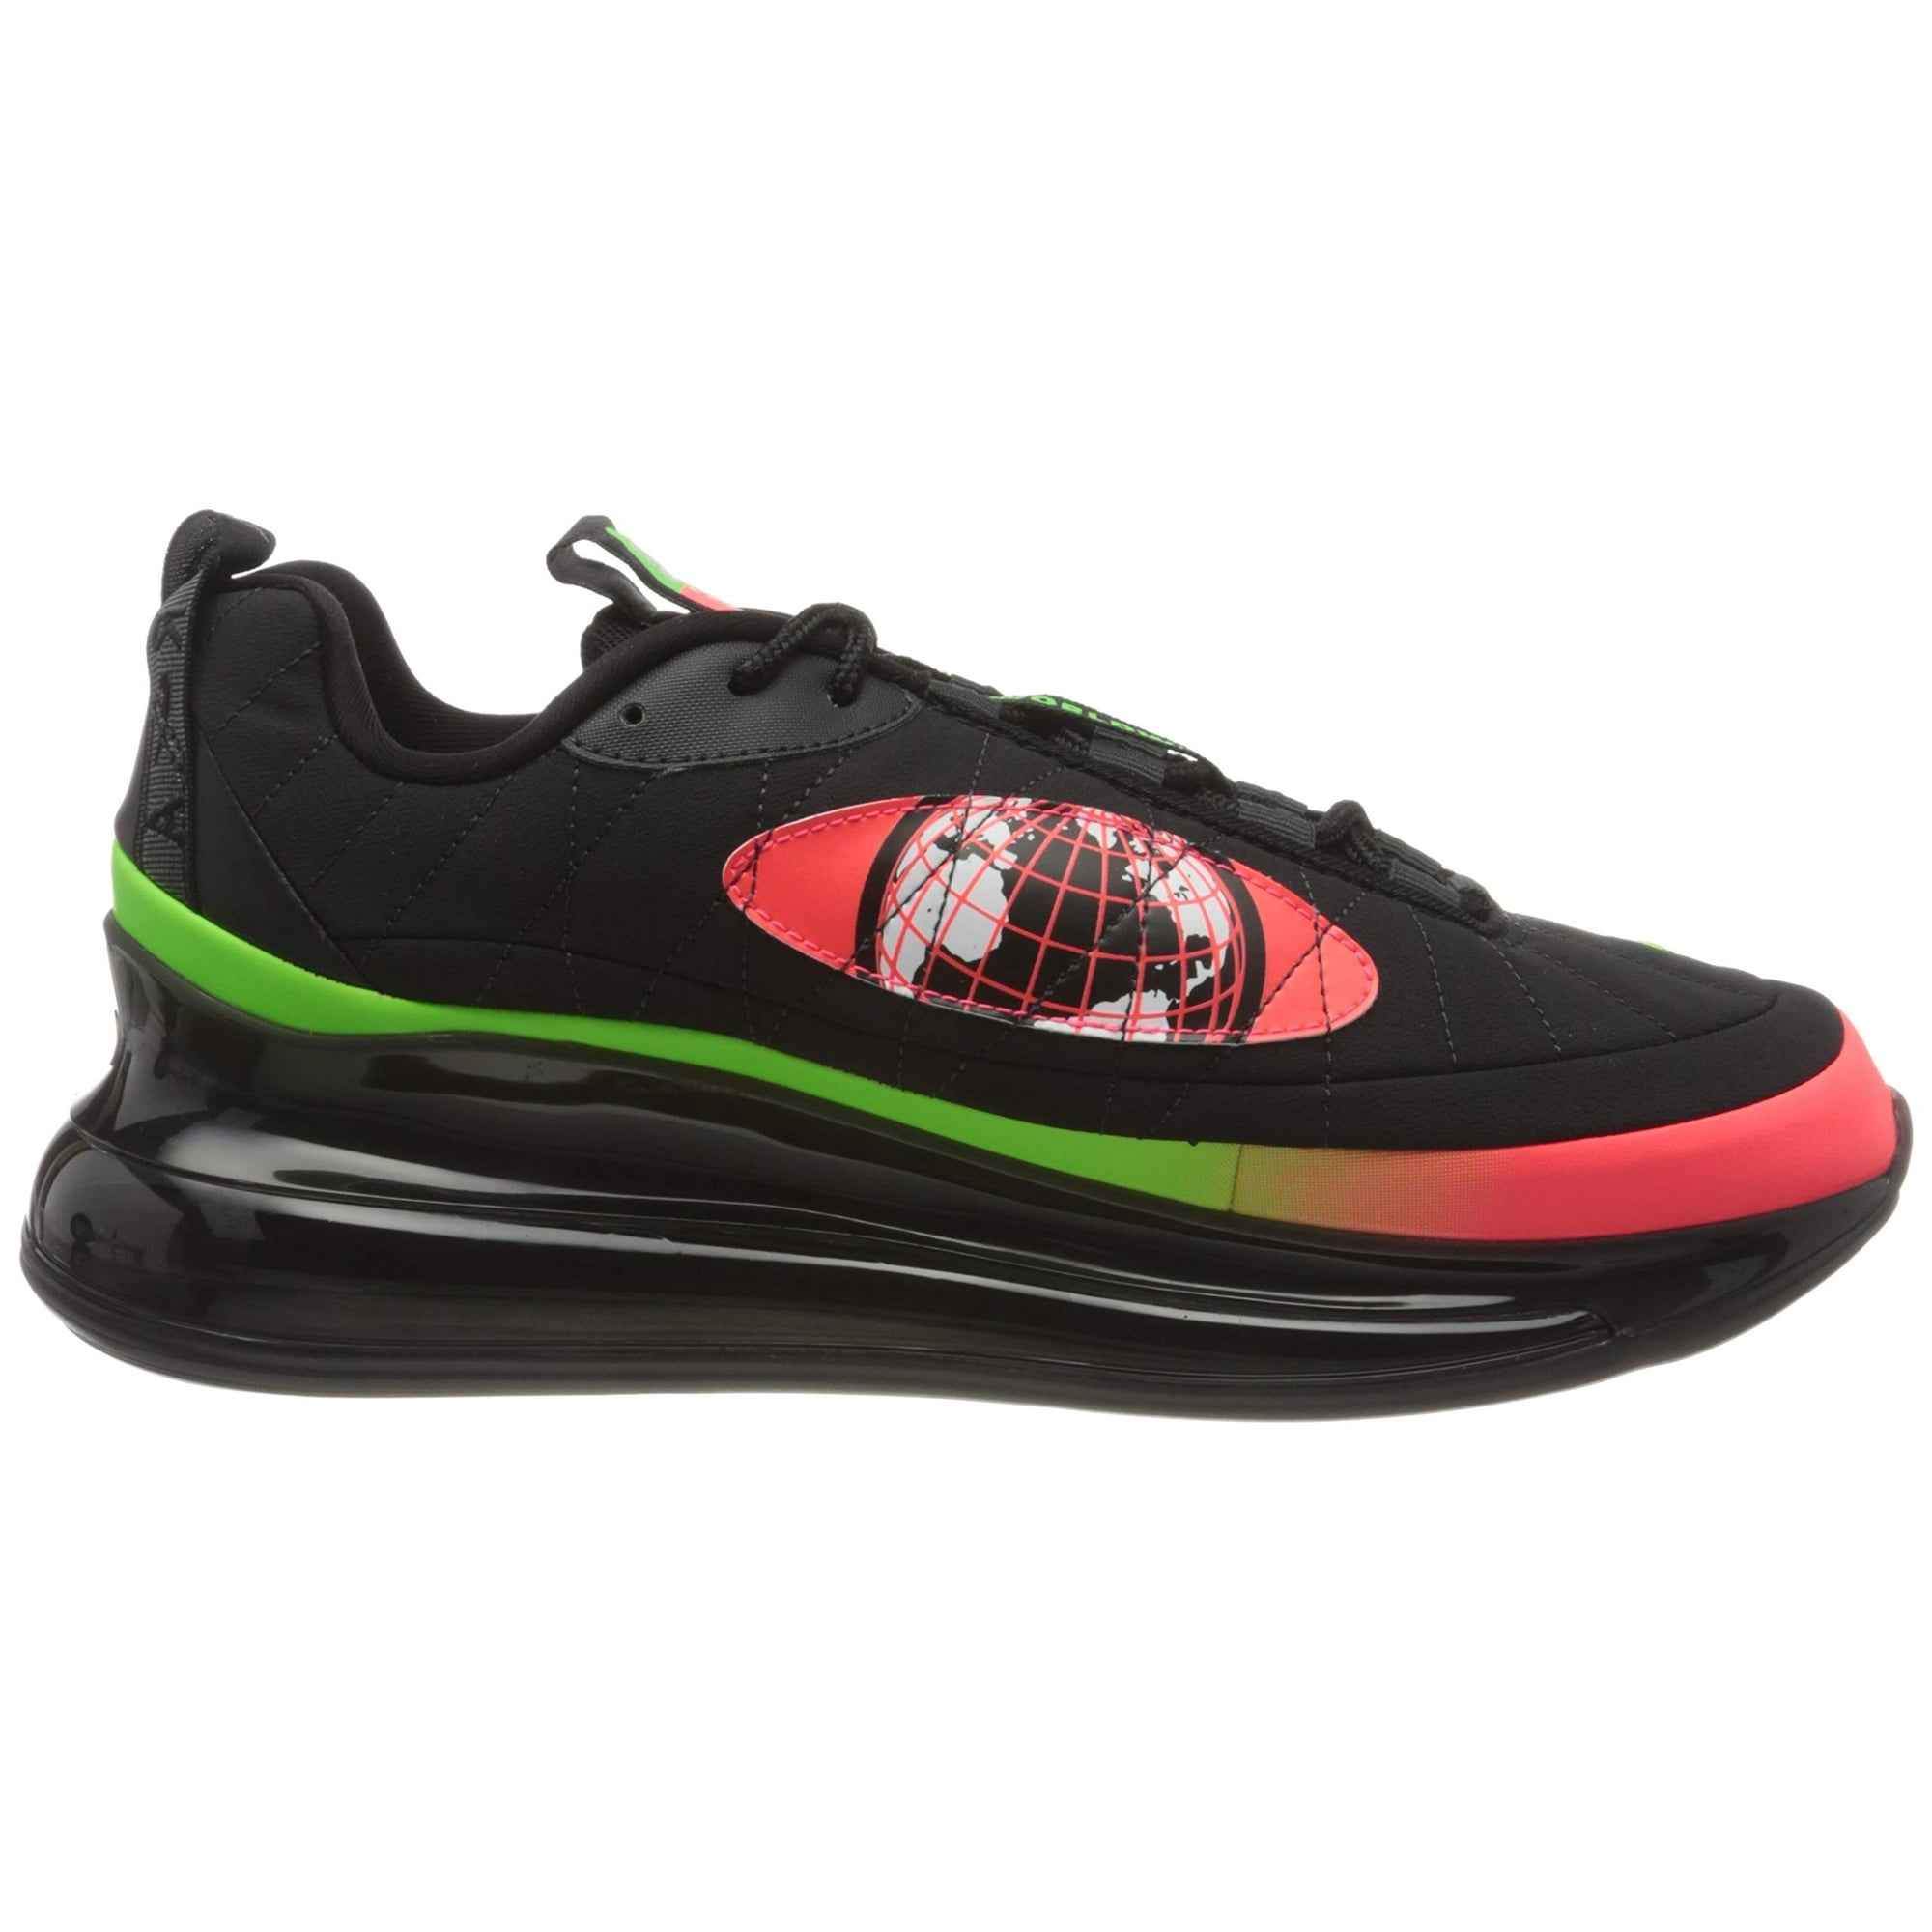 Nike Men's Air Max 720-818 Worldwide Running Shoes (13